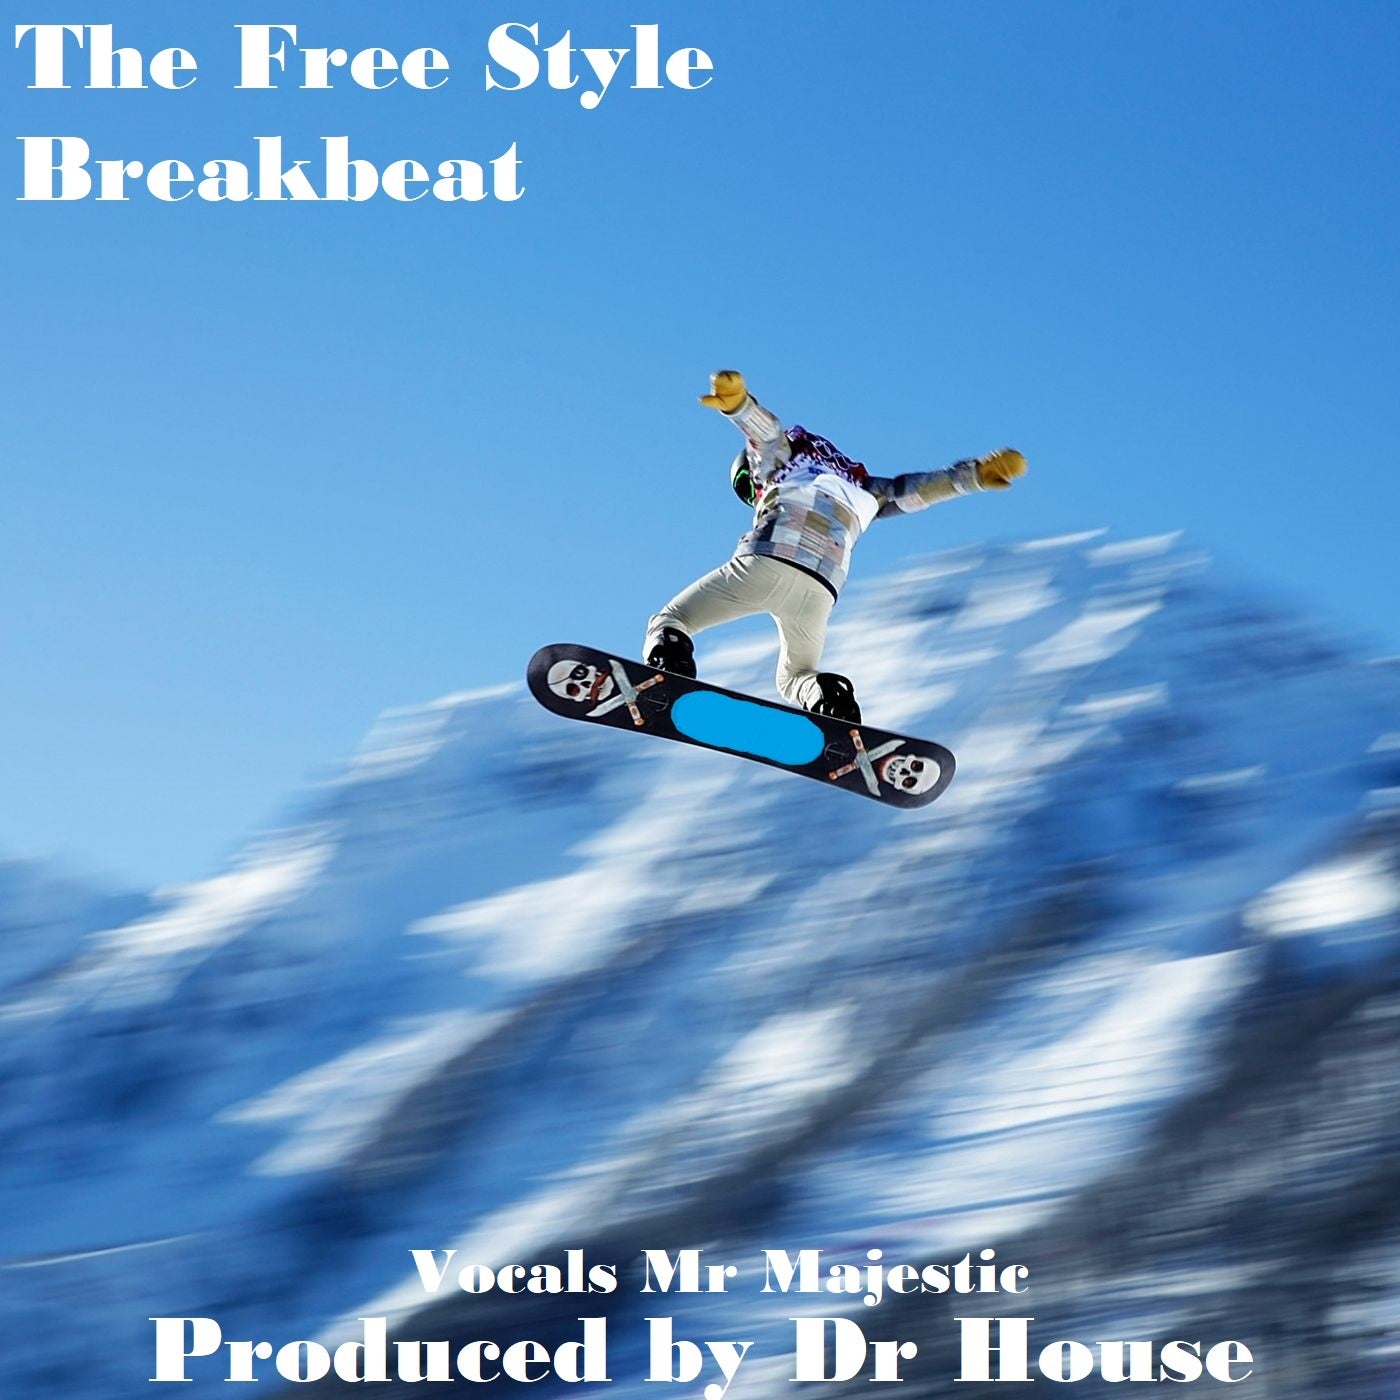 The Free Style Breakbeat